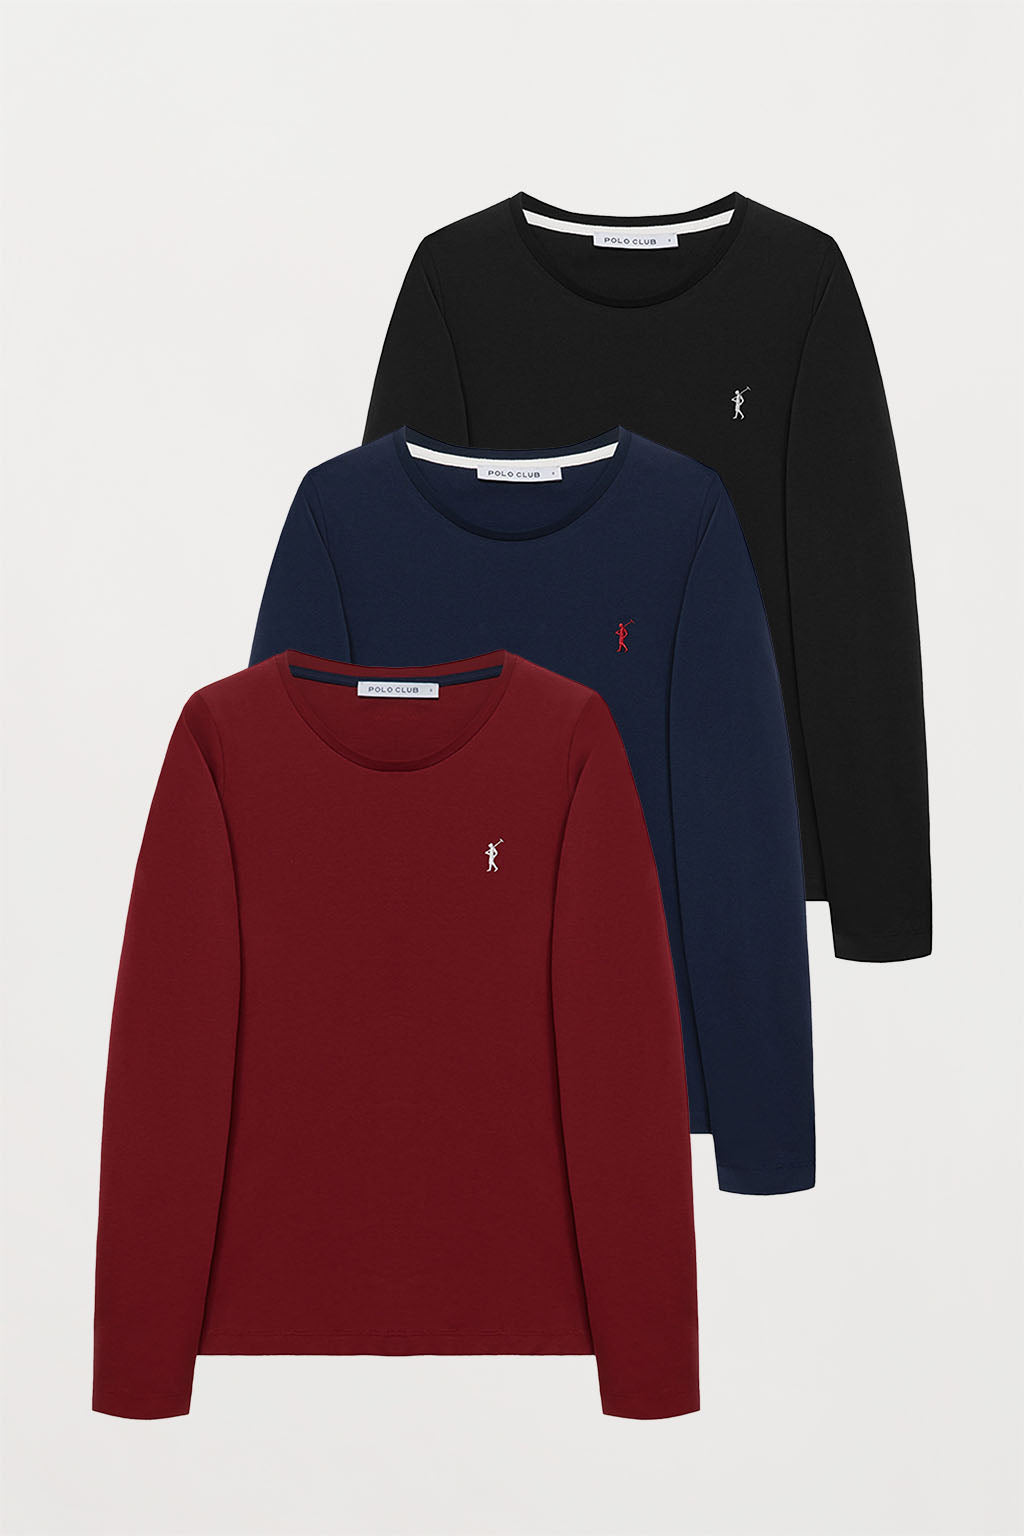 Pack de tres camisetas de manga larga azul marino, granate y negra con –  Polo Club